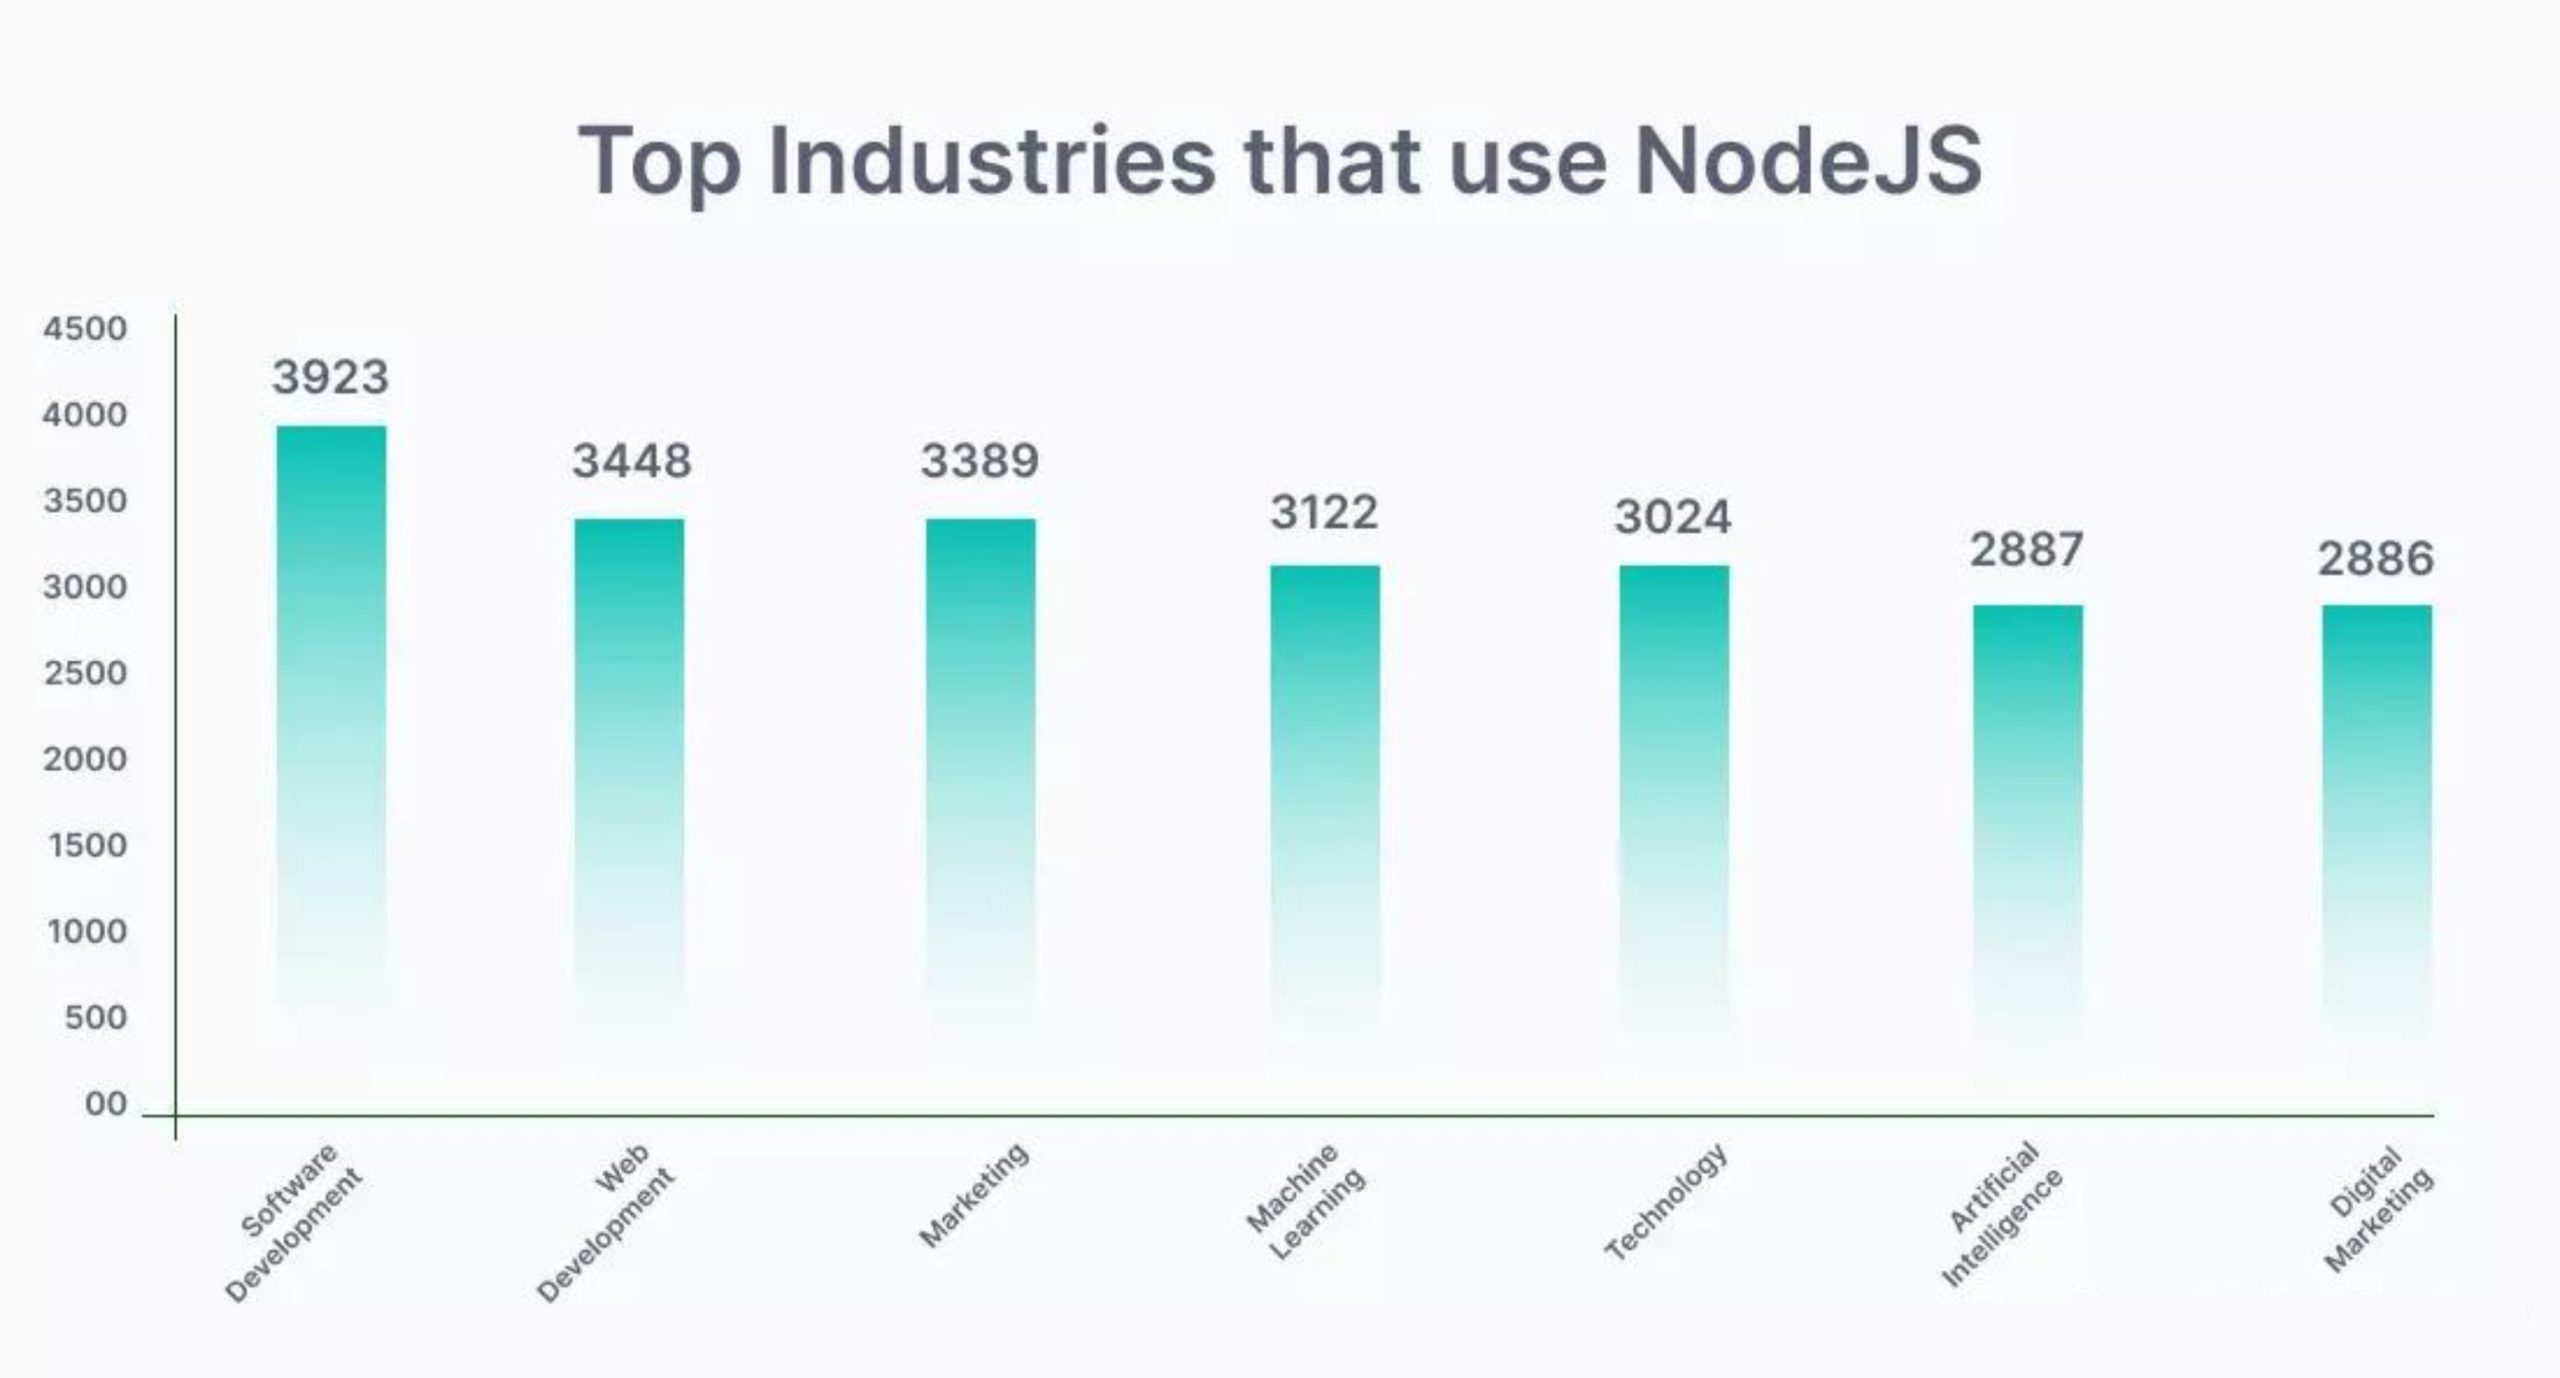 Top-Industries-uTop-Industries-using-NodeJSsing-NodeJS